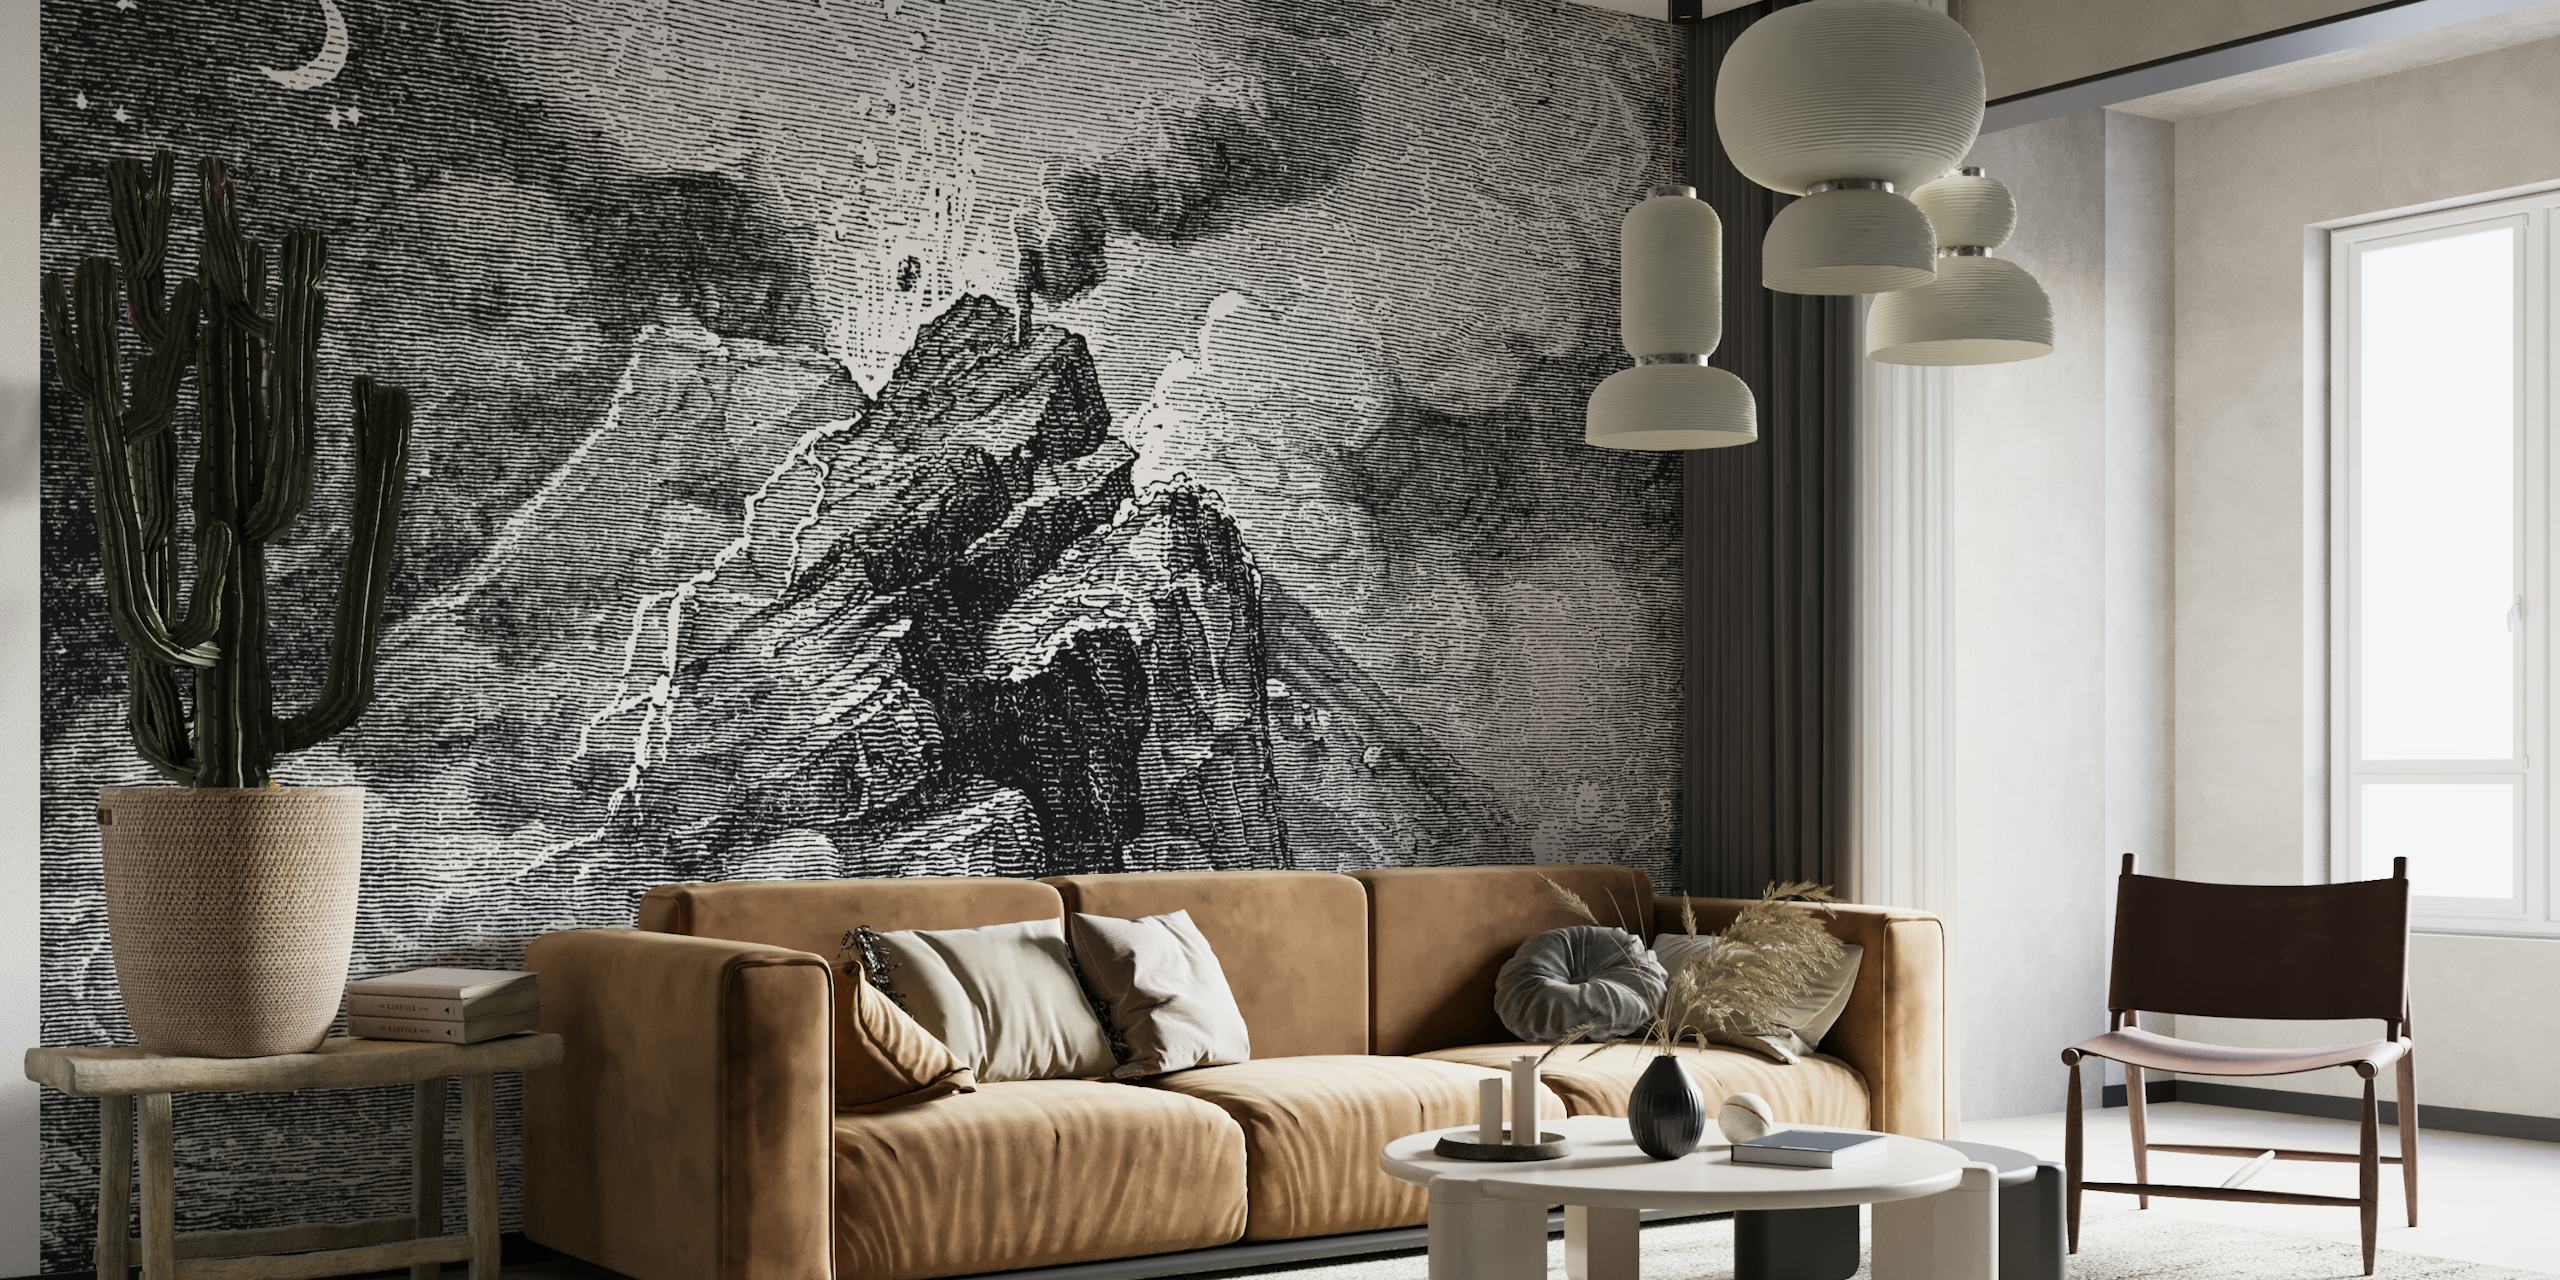 Volcano wallpaper